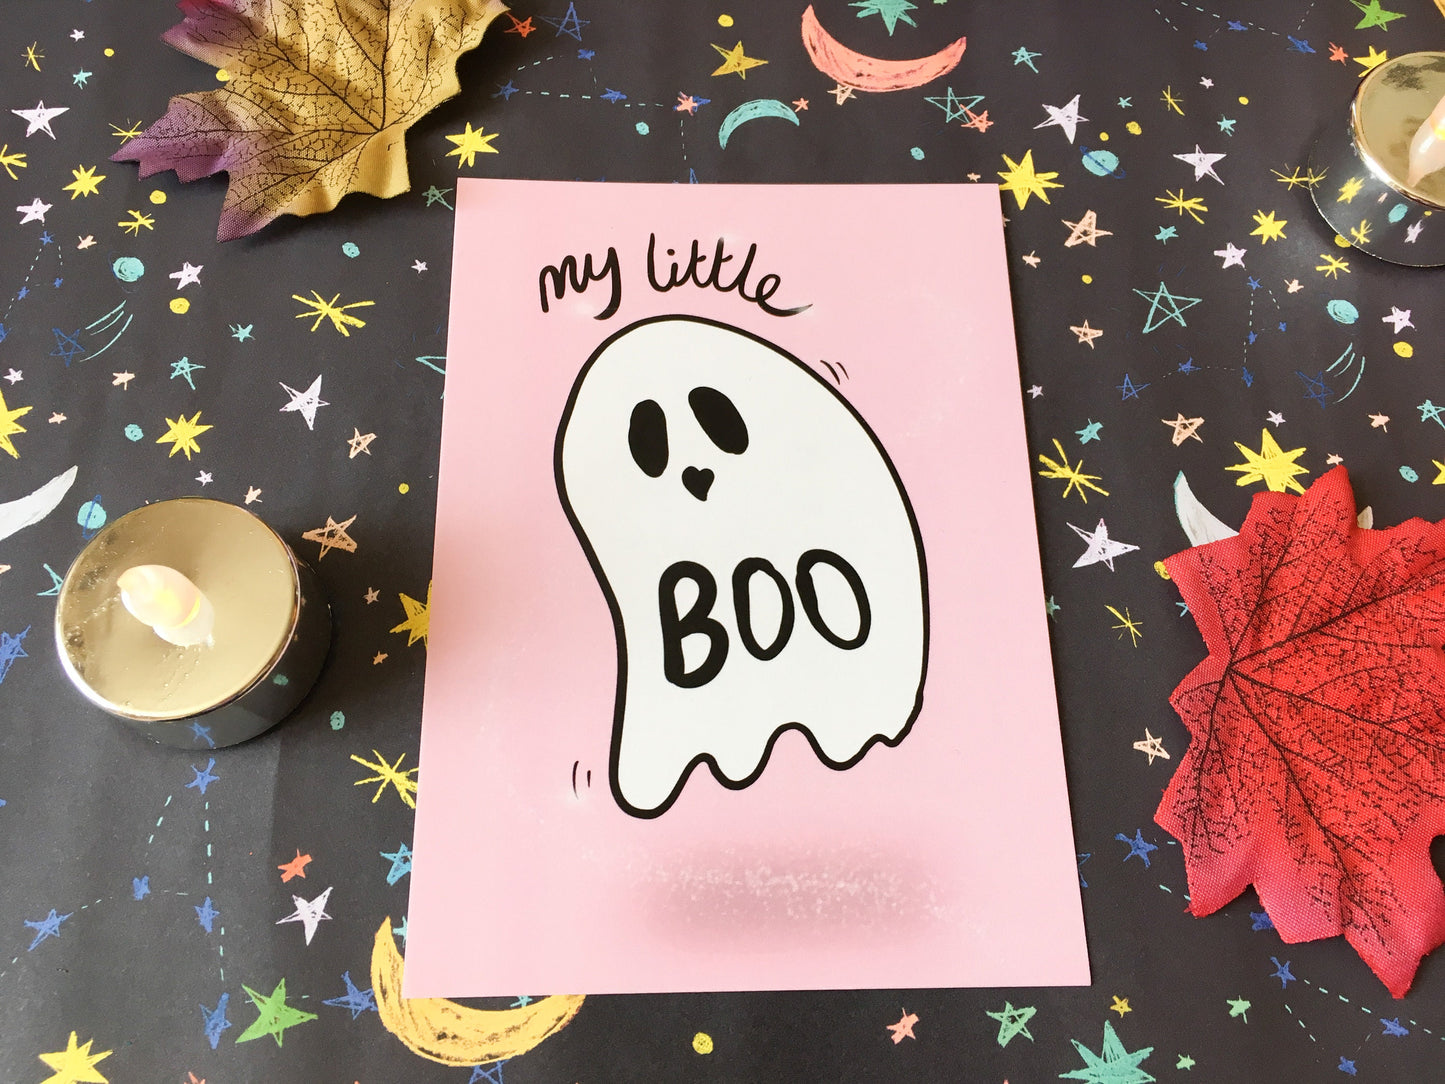 My Little Boo Postcard, Halloween Decor